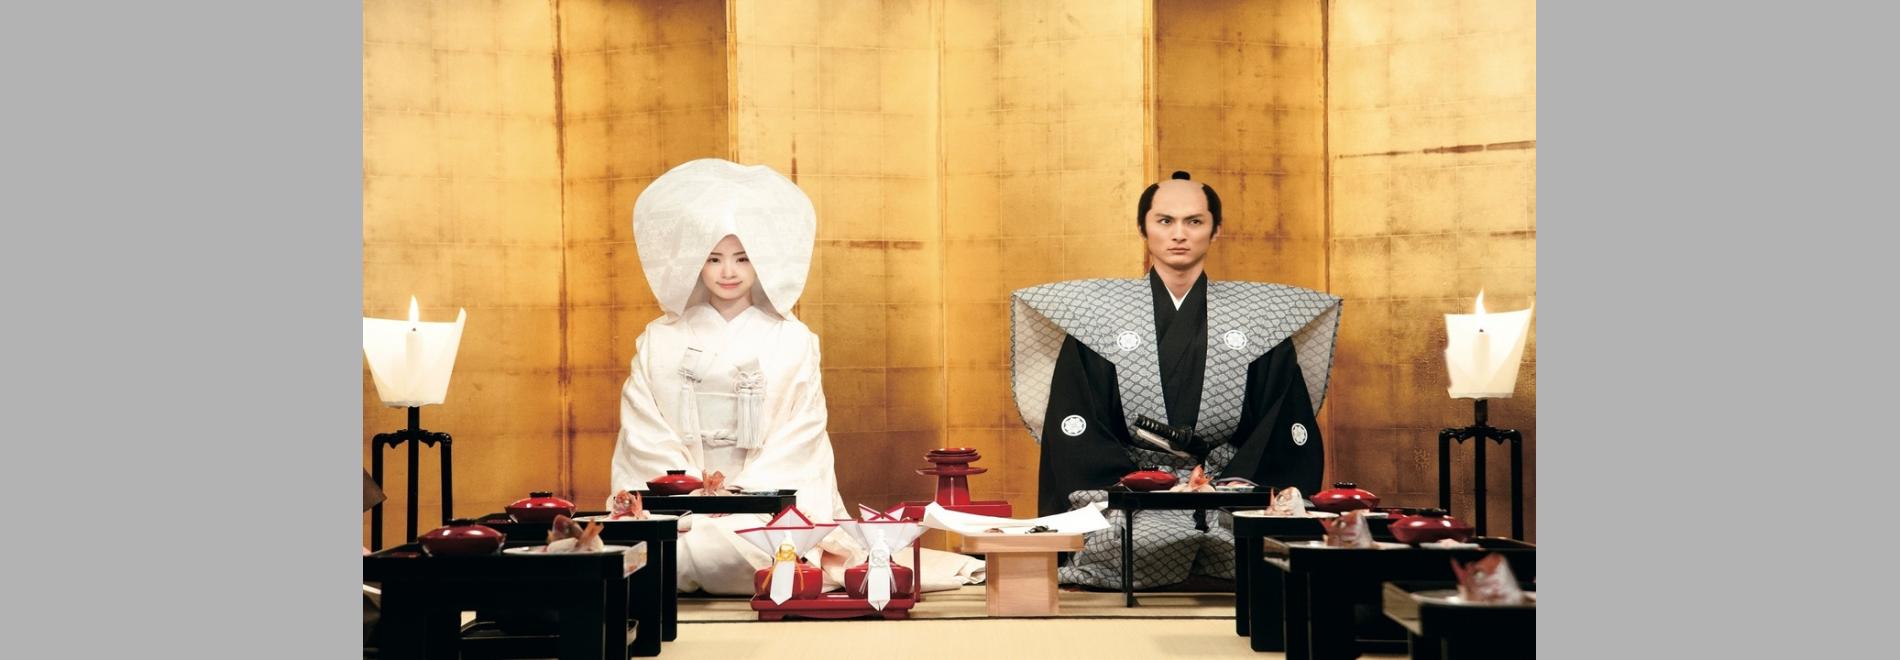 Bushi no kondate (Y. Asahara, 2013)  ©2013 “A Tale of Samurai Cooking” Film Partners